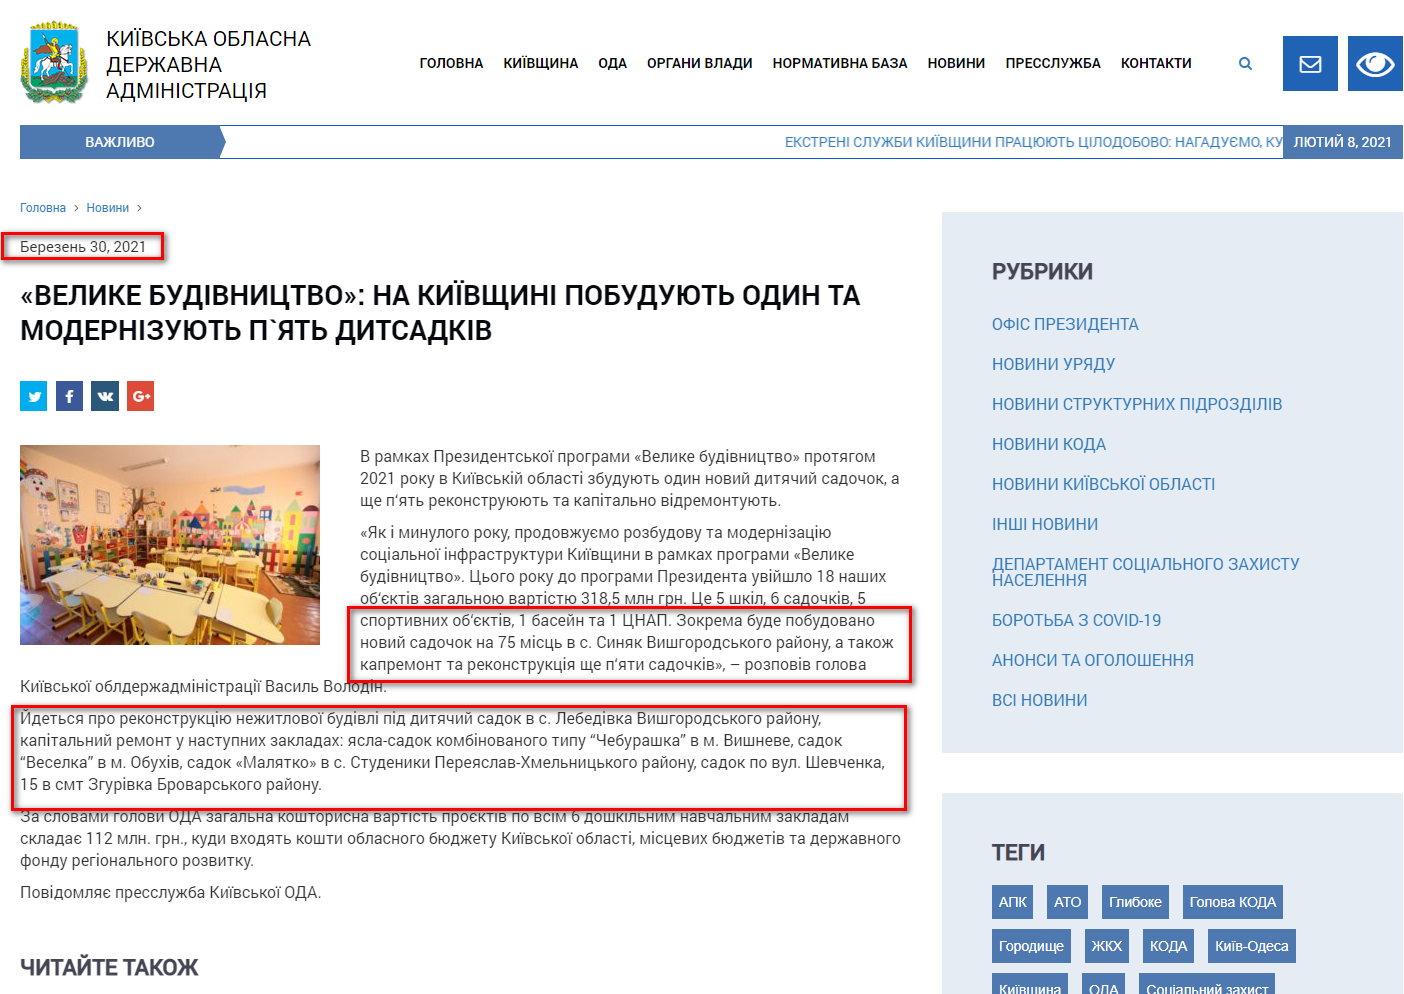 http://koda.gov.ua/news/velike-budivnictvo-na-kiivshhini-pob/